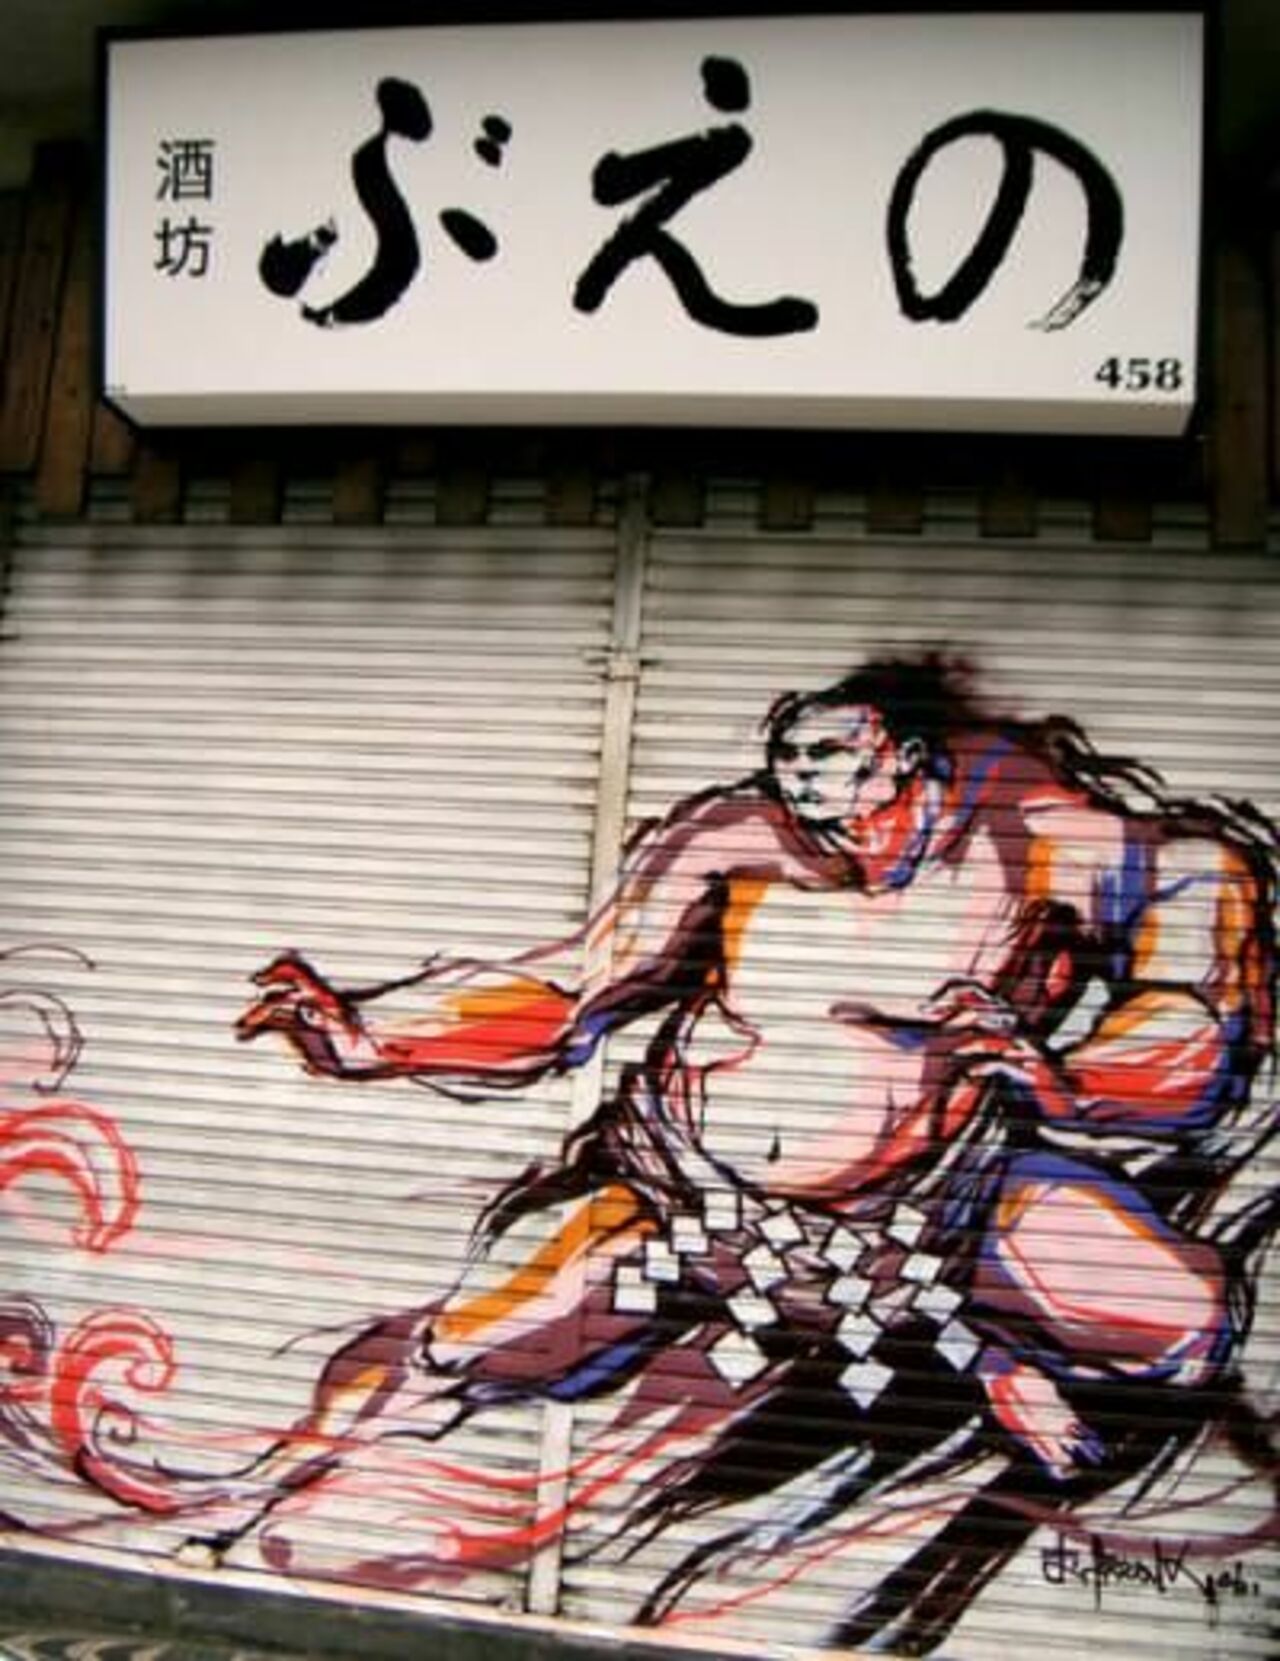 Street Fighter   • #streetart #graffiti #art #asia #funky #dope . : http://t.co/nlsy6C39i5